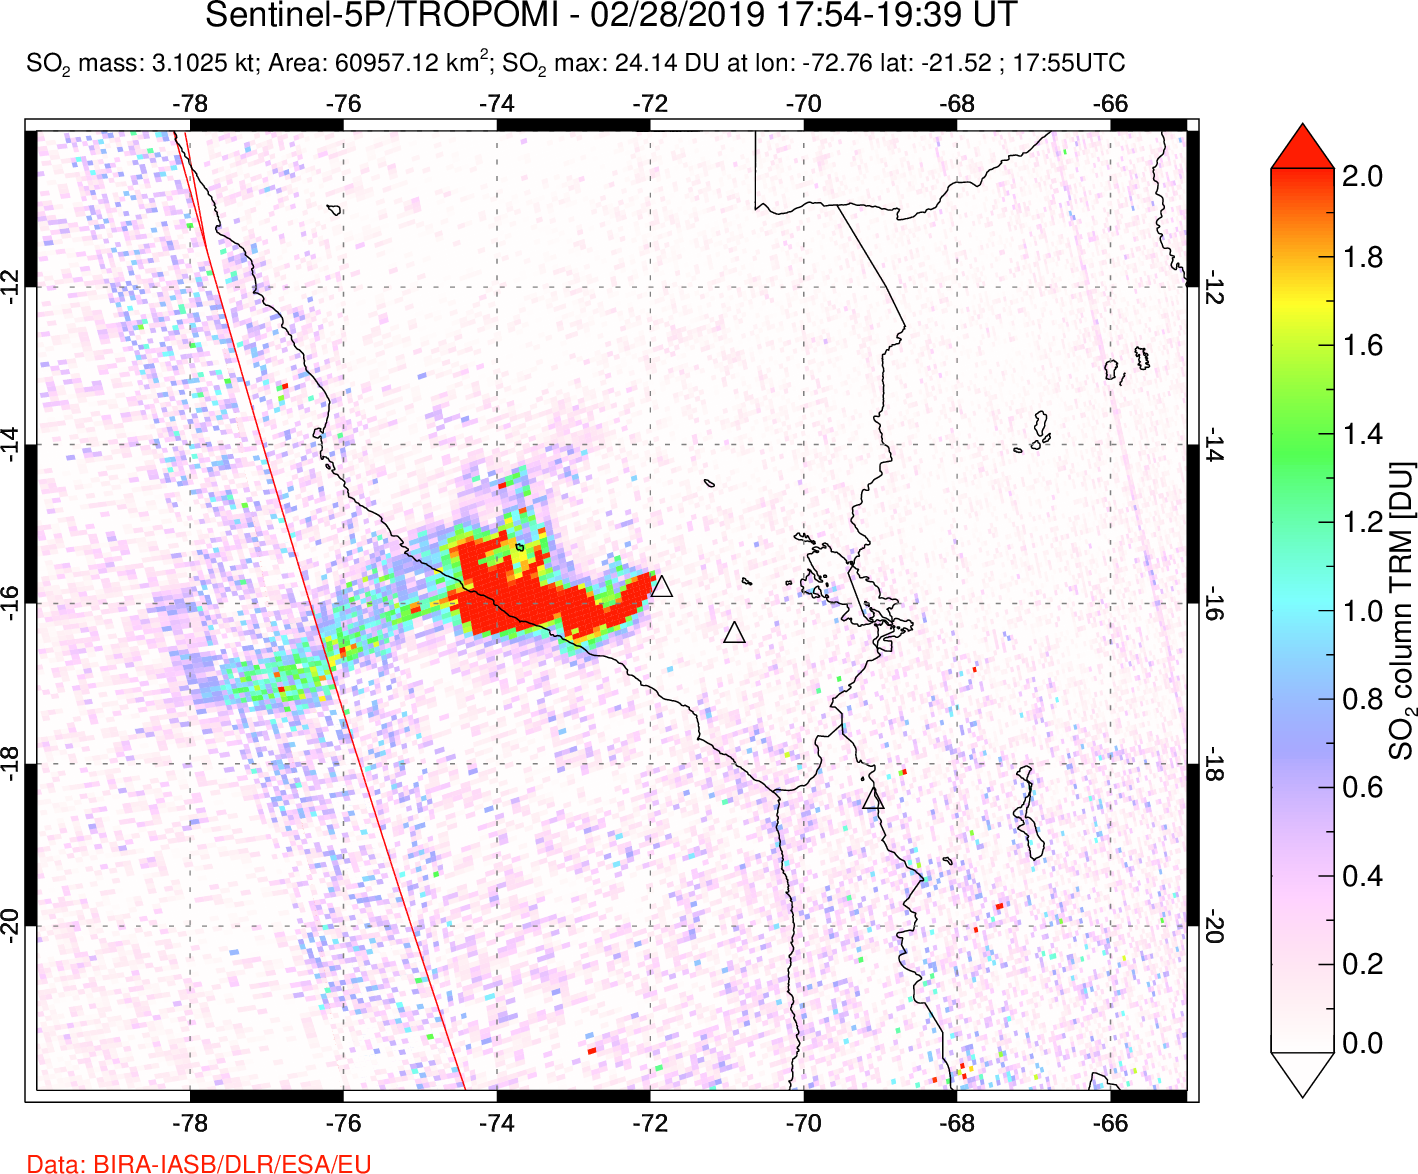 A sulfur dioxide image over Peru on Feb 28, 2019.